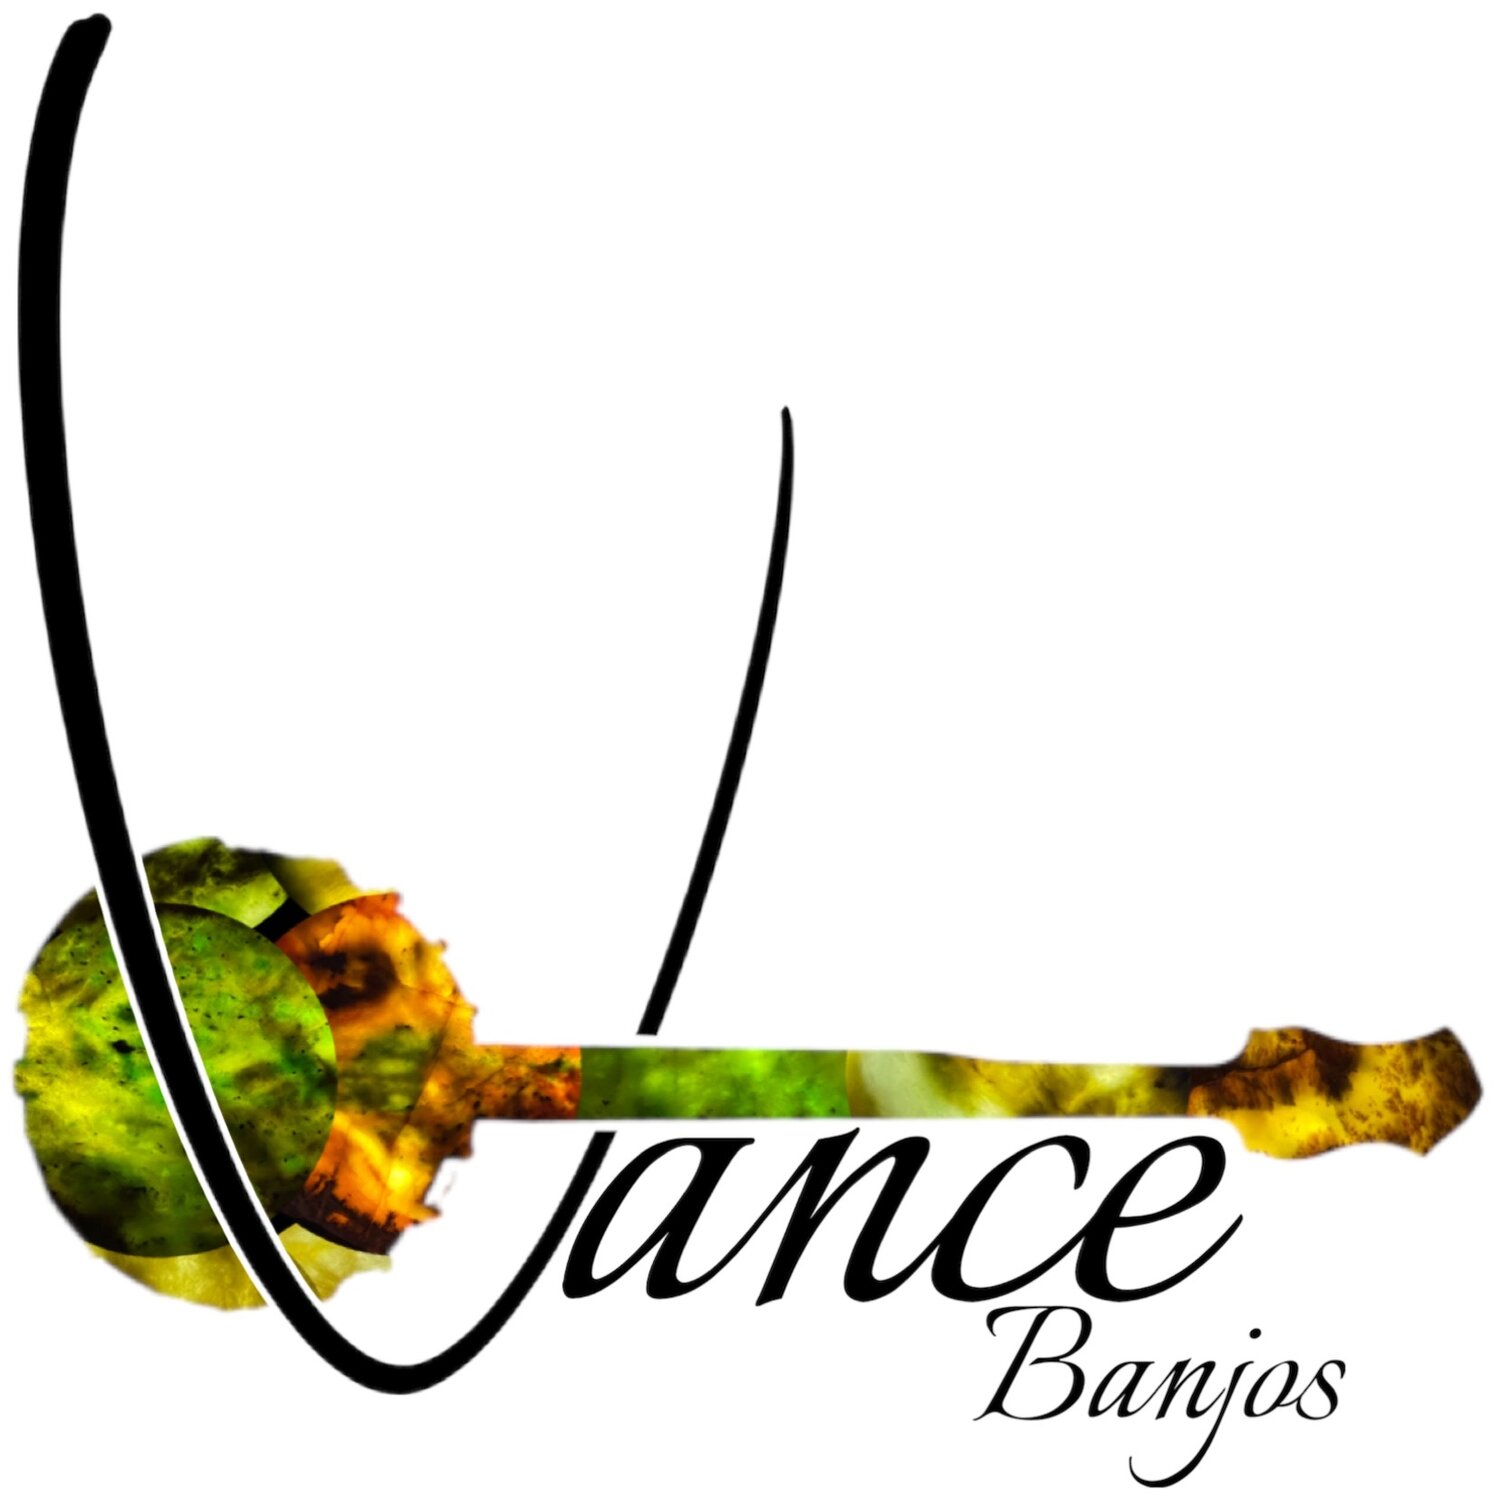 Vance Banjos